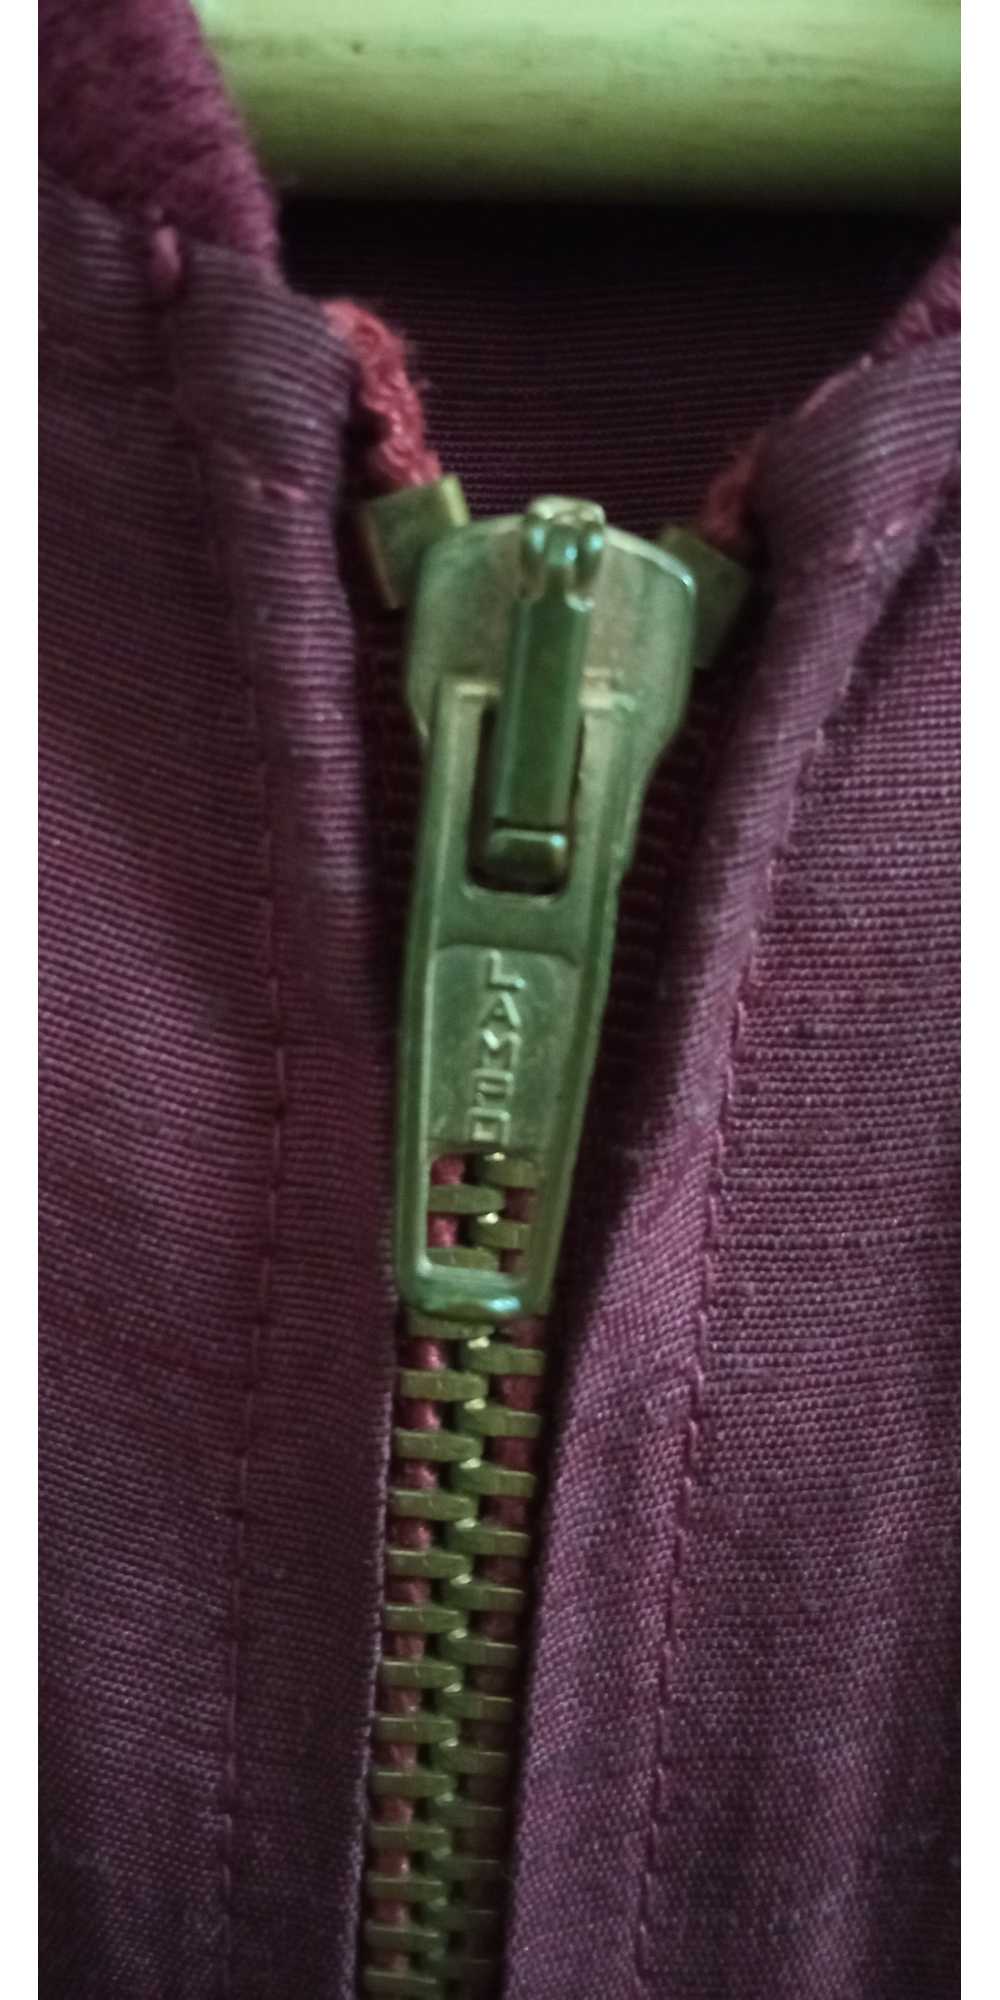 Jean Paul Gaultier S/S 1993 Vintage Denim Bra Bustier Corset Lace Up Zipper  Top